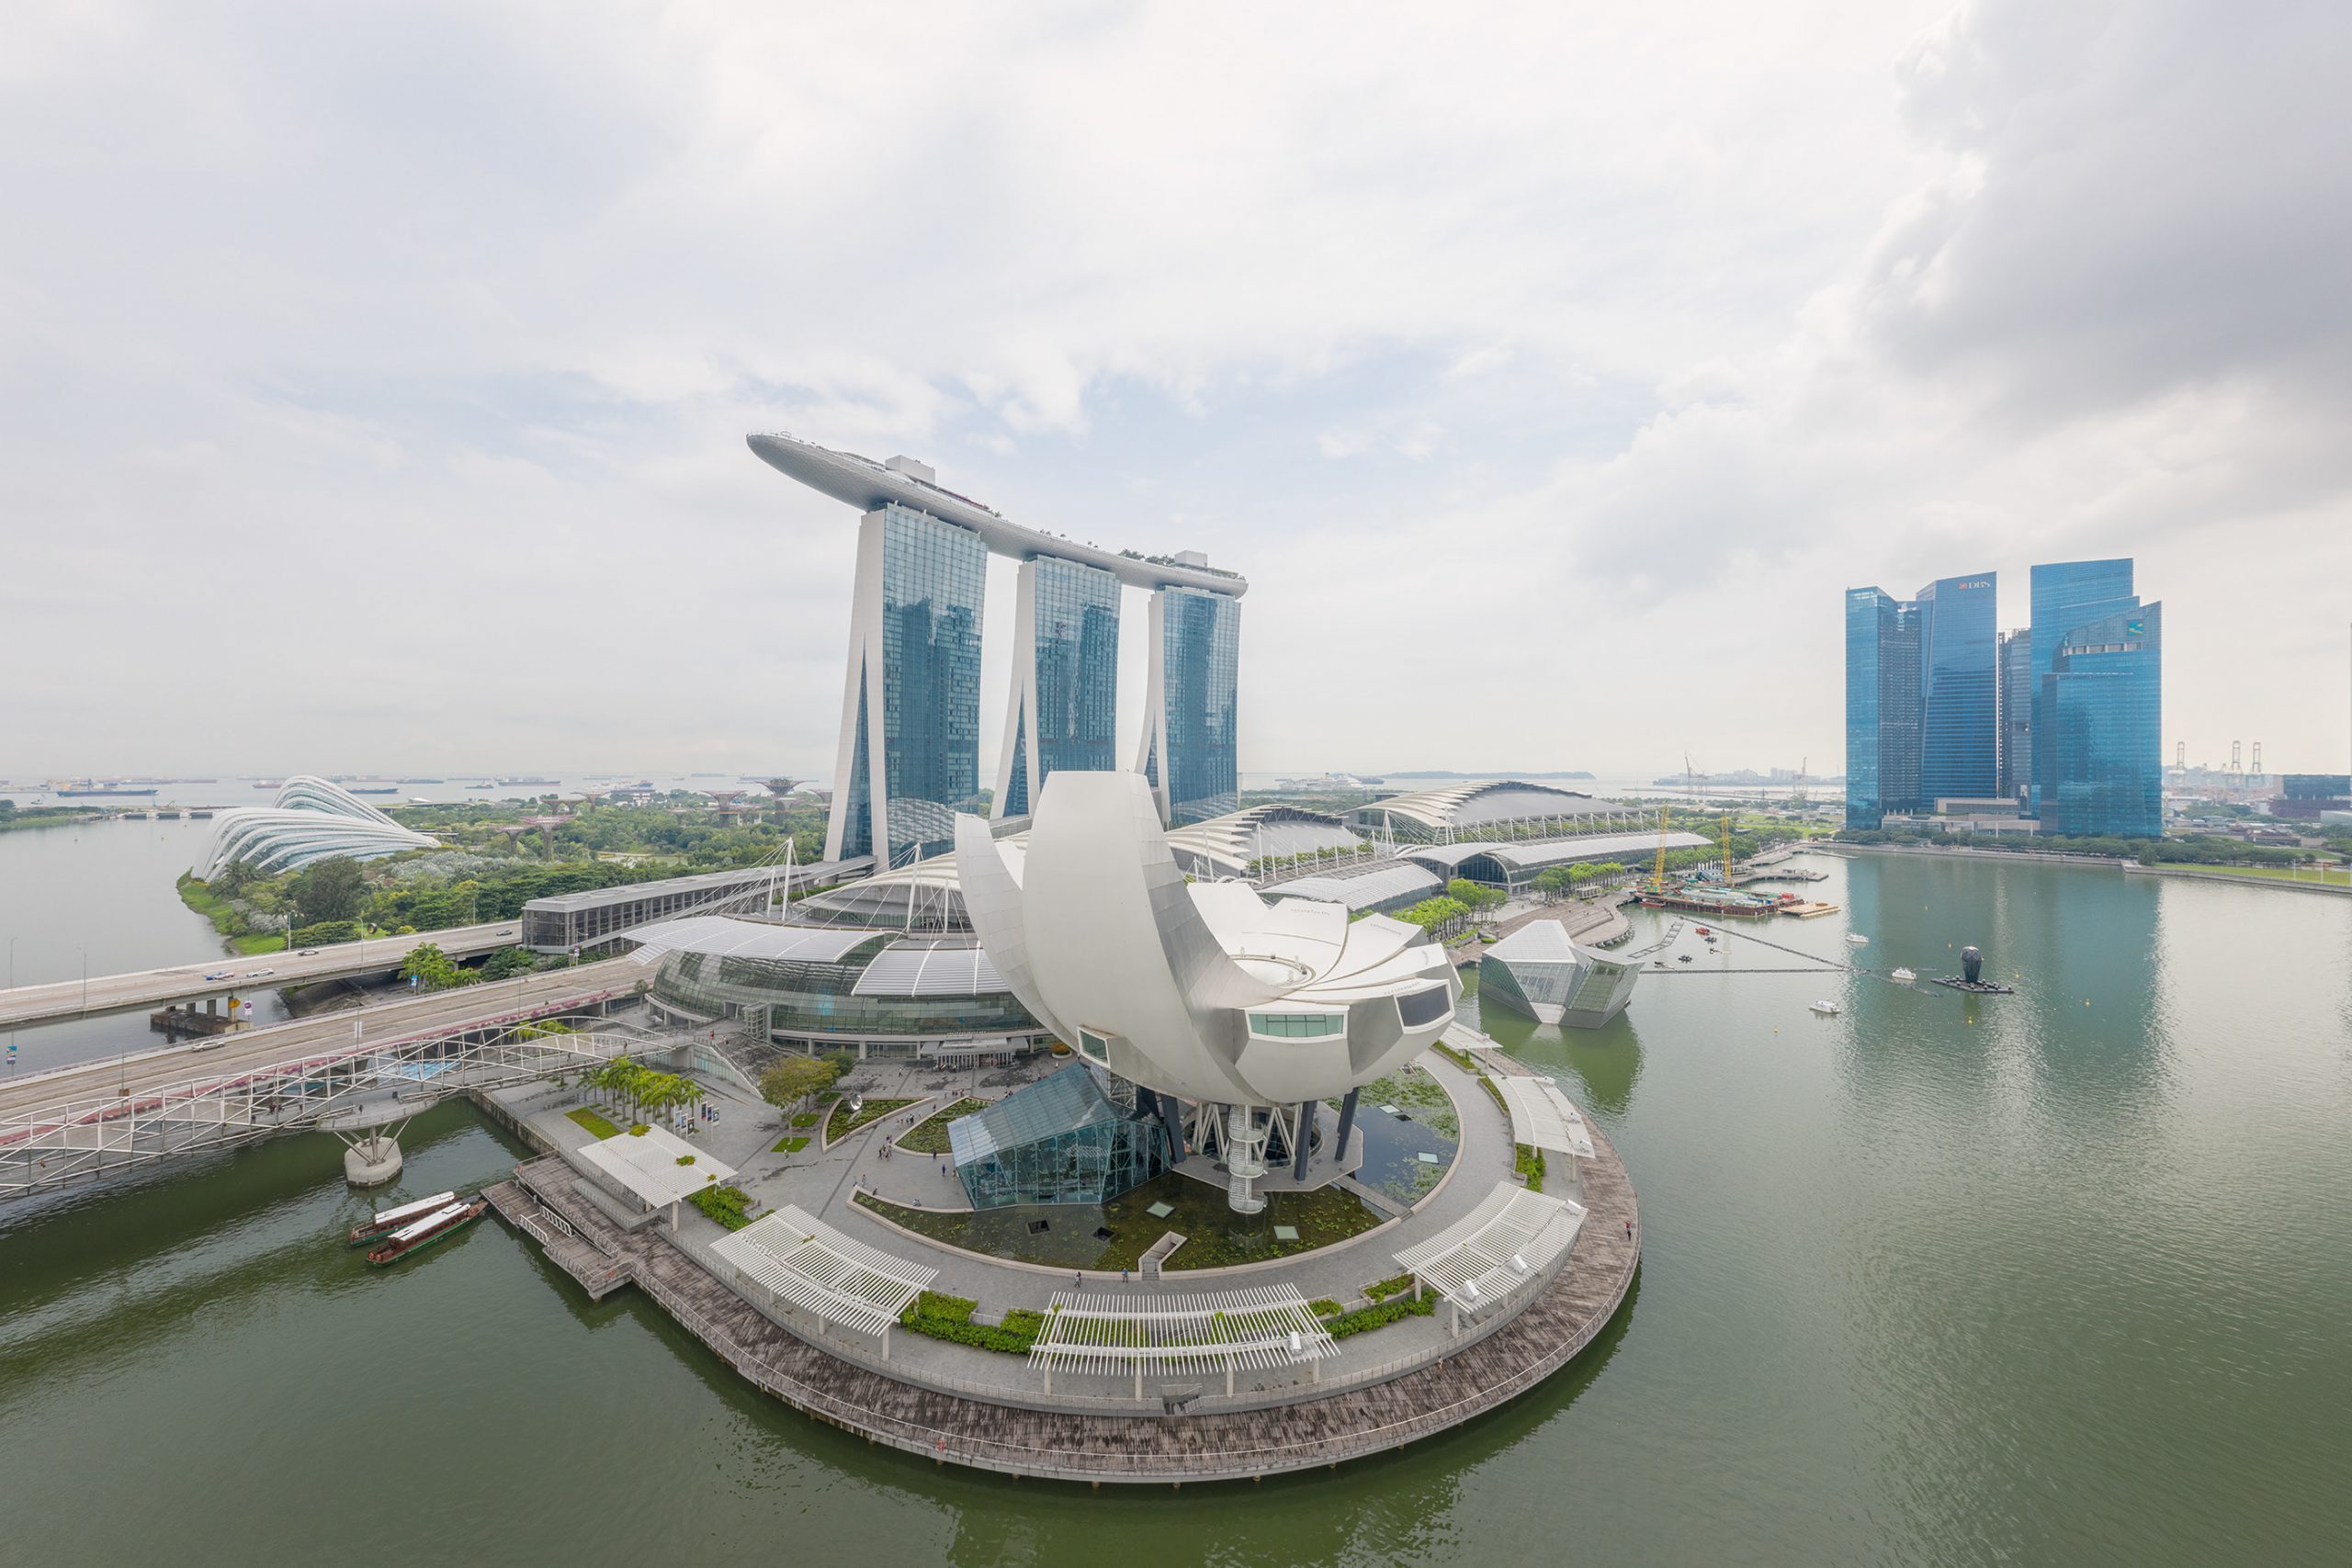 Crystal Pavilion North - Marina Bay Sands (MBS) Image Singapore